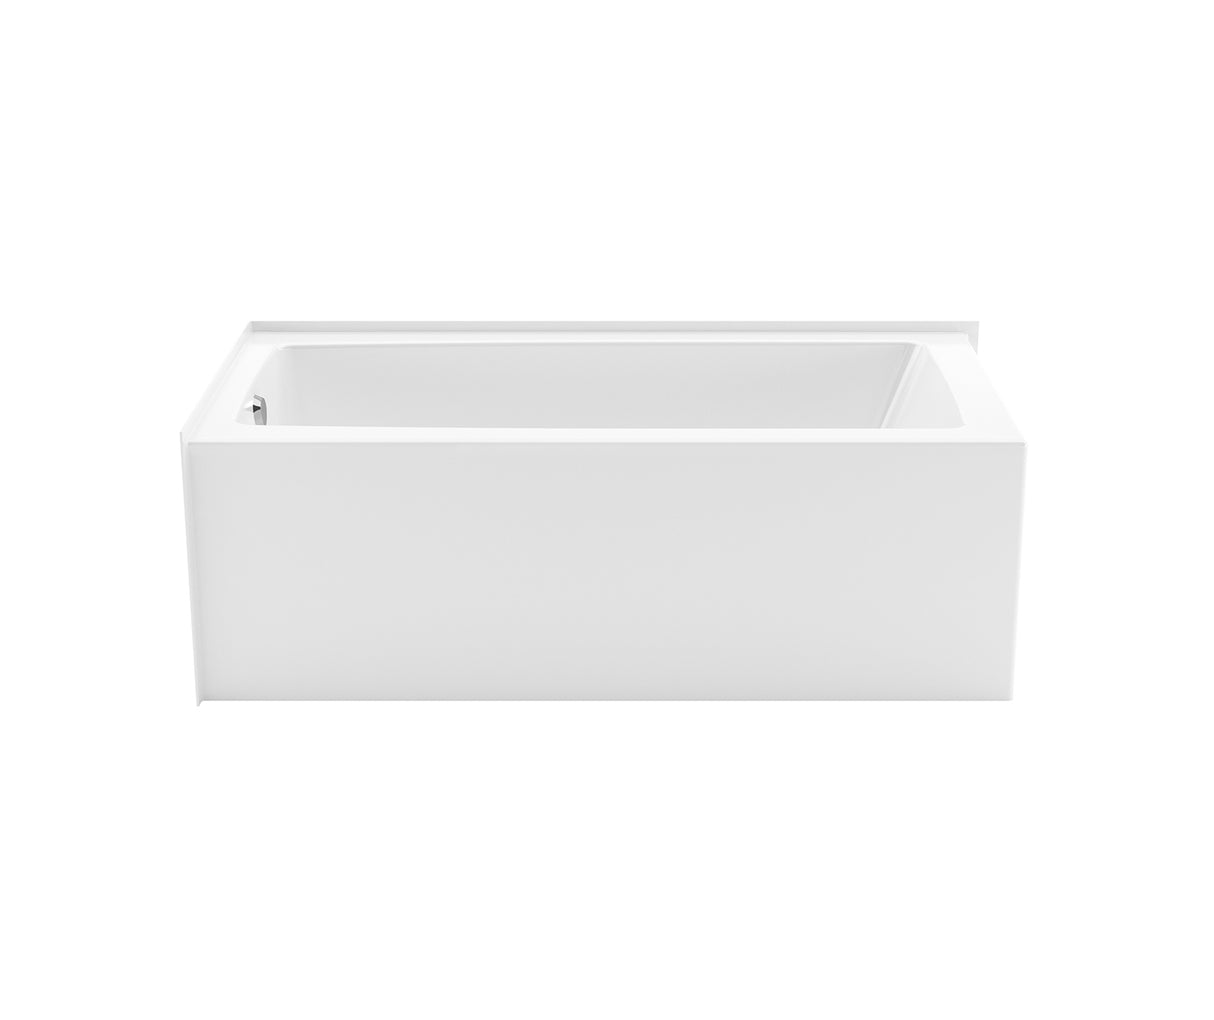 MAAX 106818-000-002-102 Nomad Corner 6030 AFR AcrylX Corner Right-Hand Drain Bathtub in White